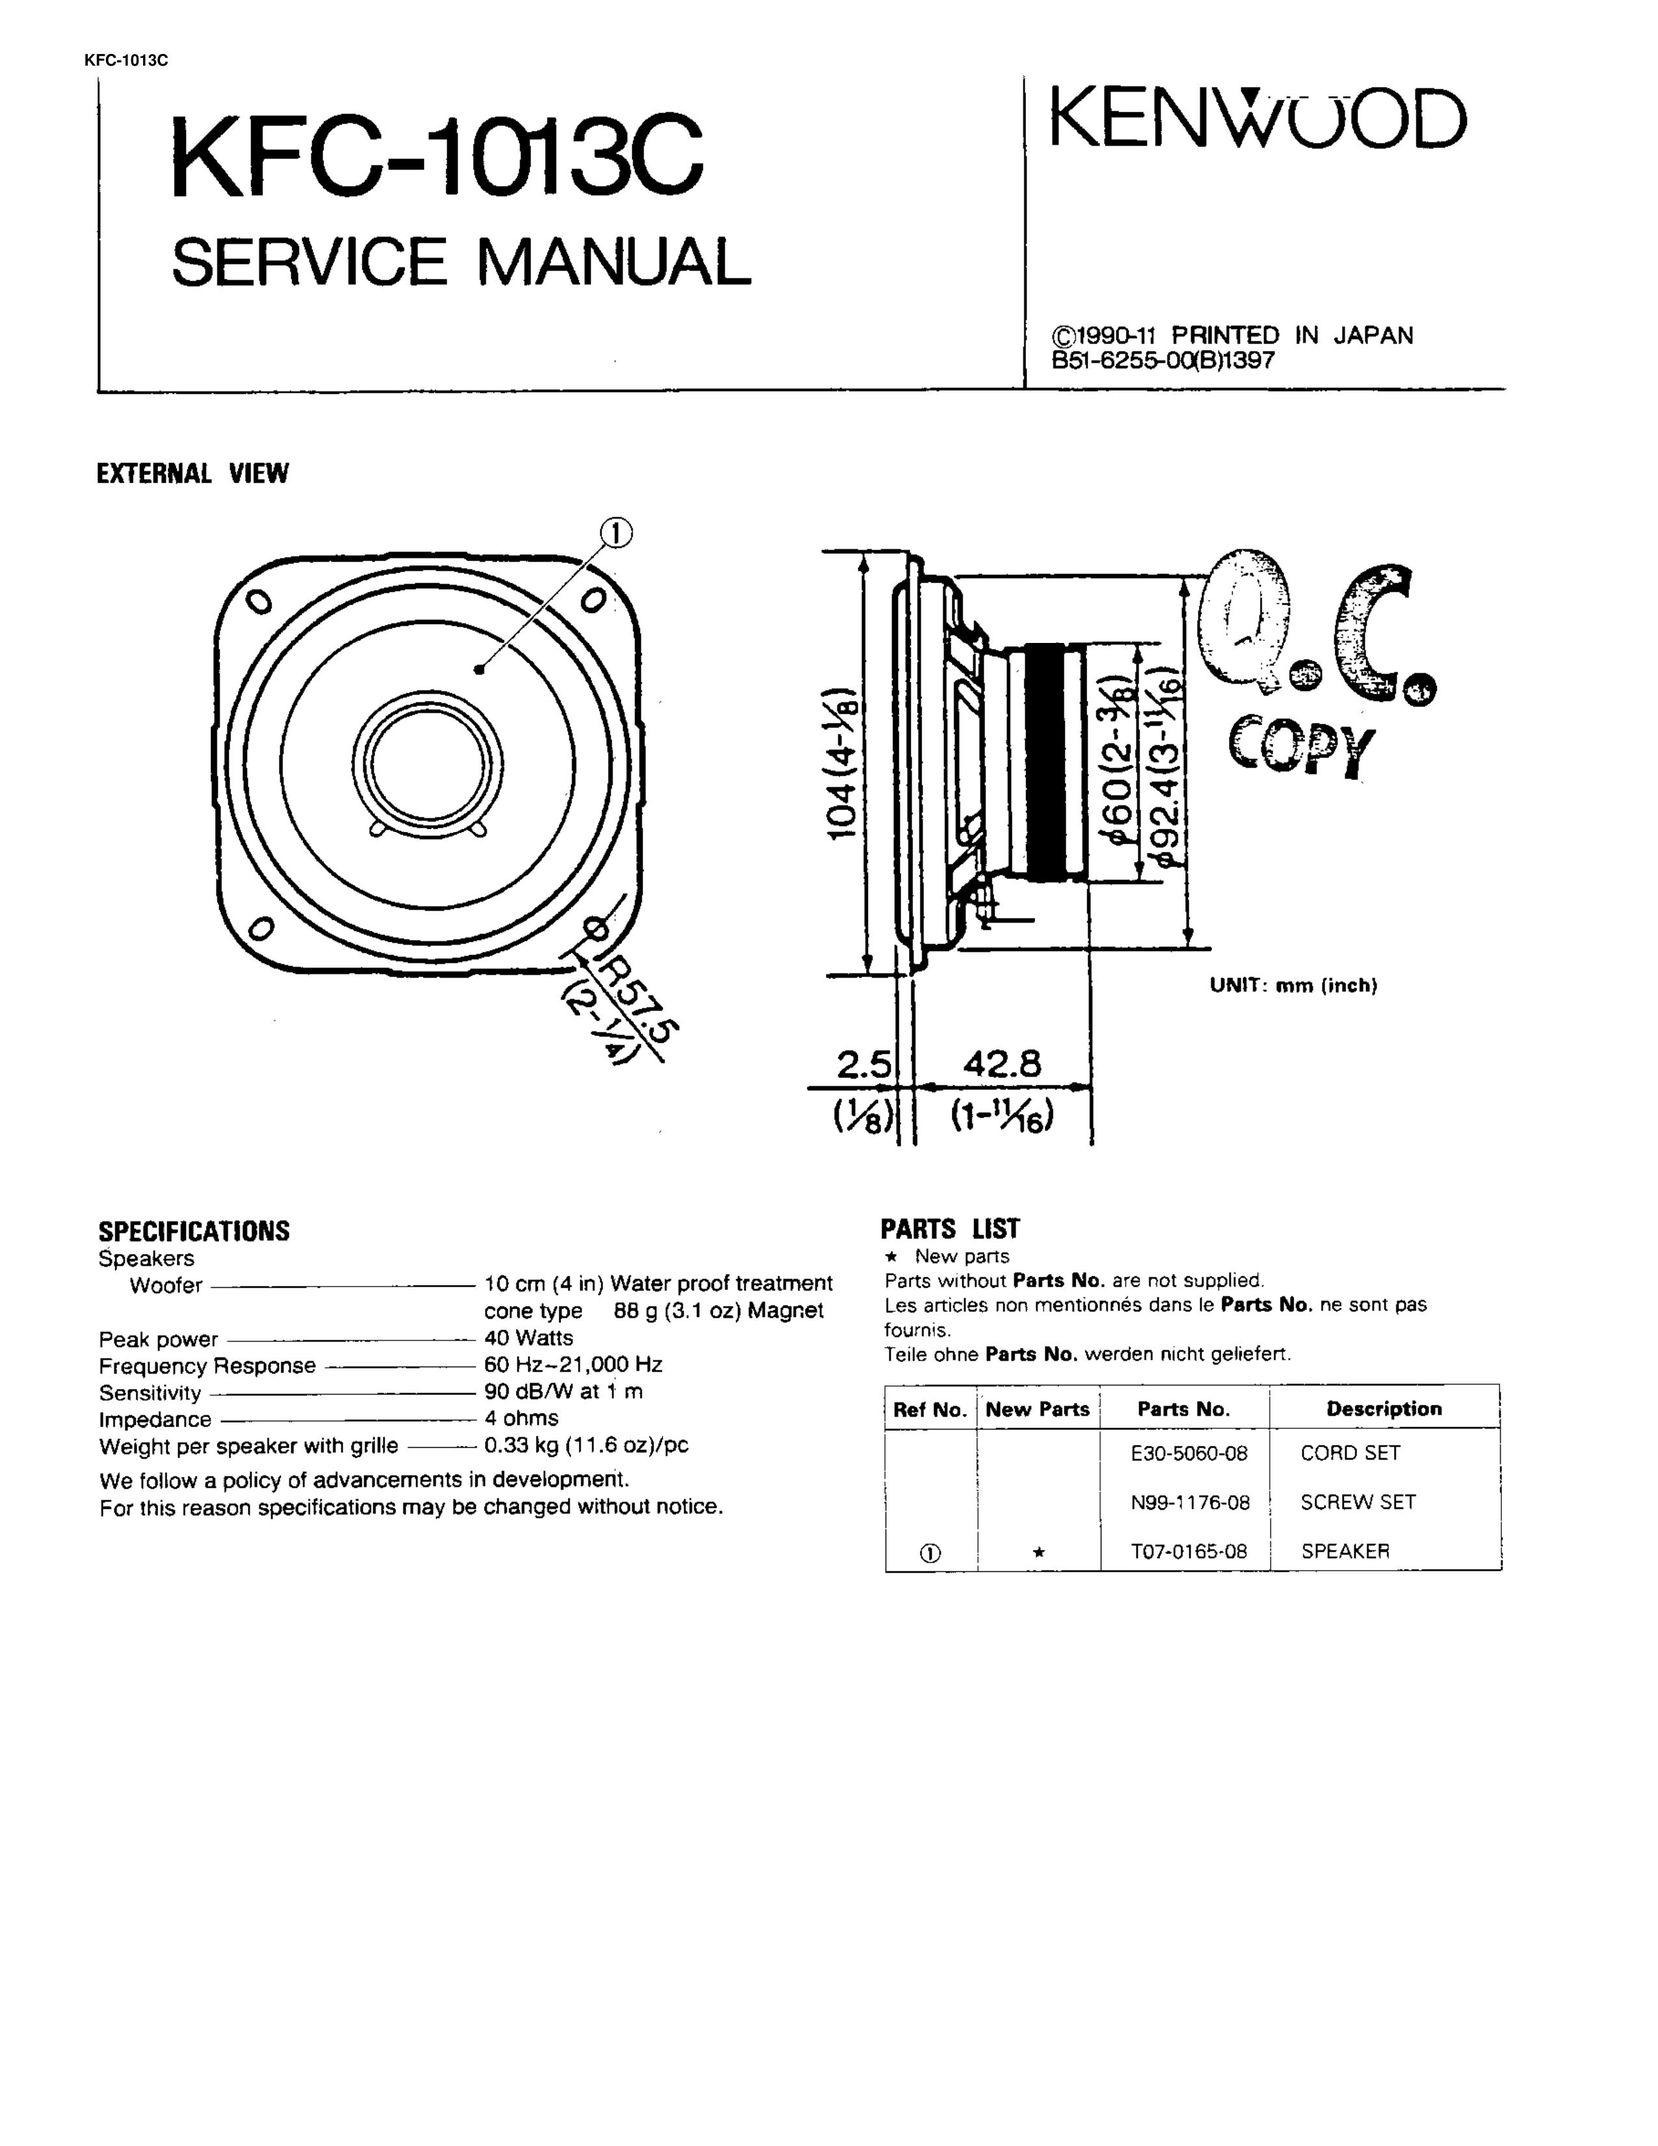 Kenwood KFC-1013C Car Speaker User Manual